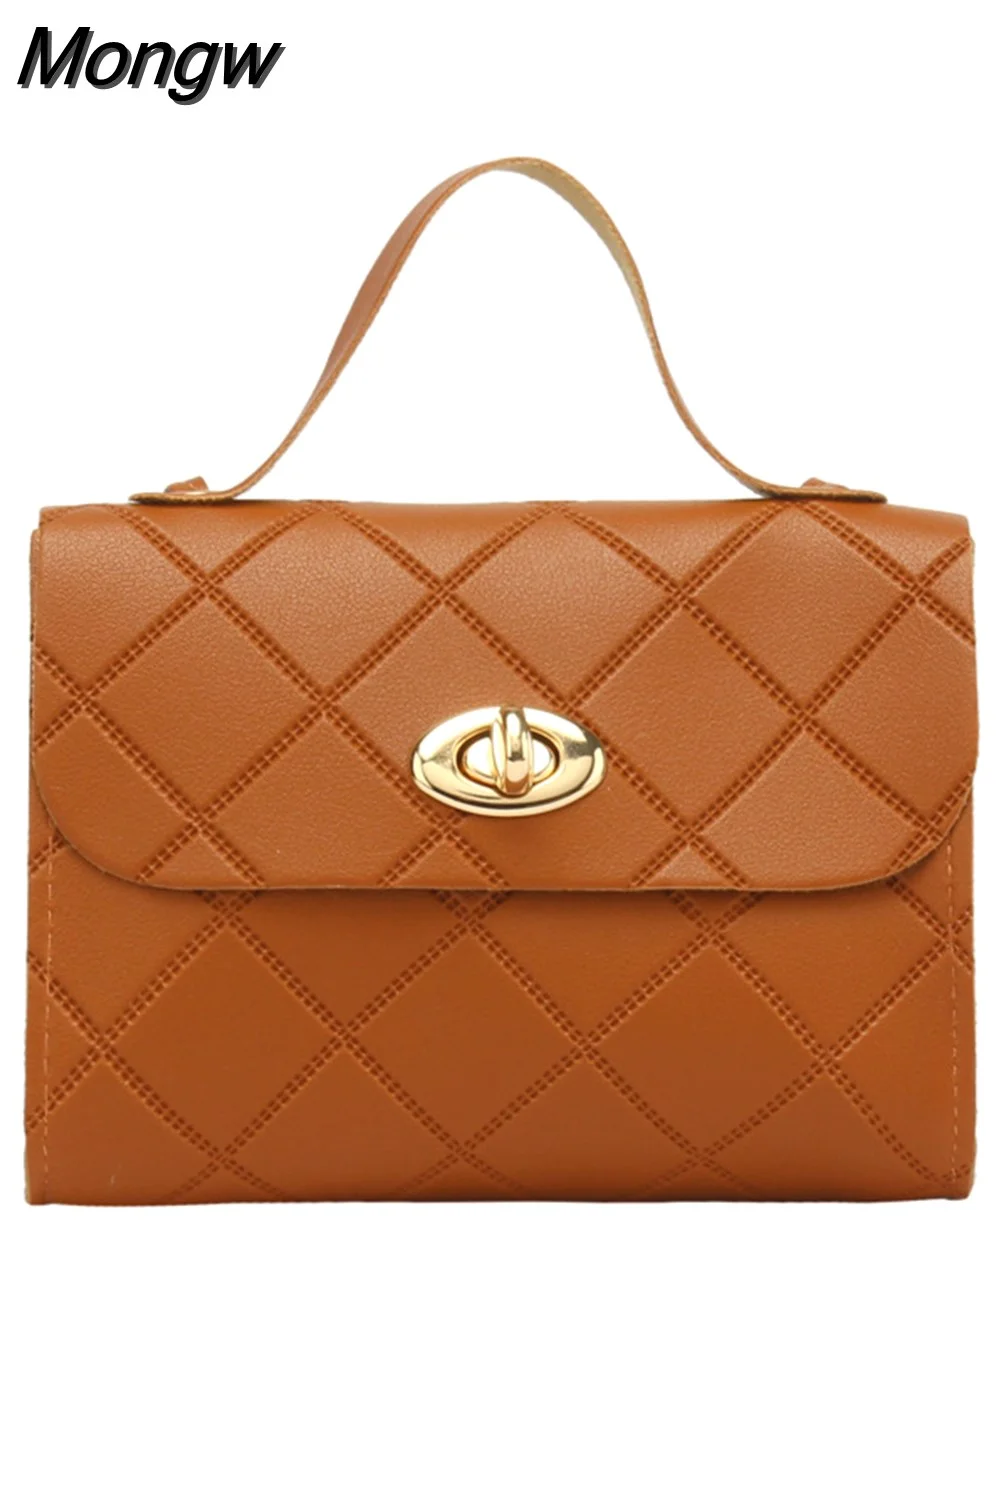 Mongw Messenger Bag For Women Trend Female Shoulder Bag 2023 Fashion Ladies Crossbody Bags Handbags